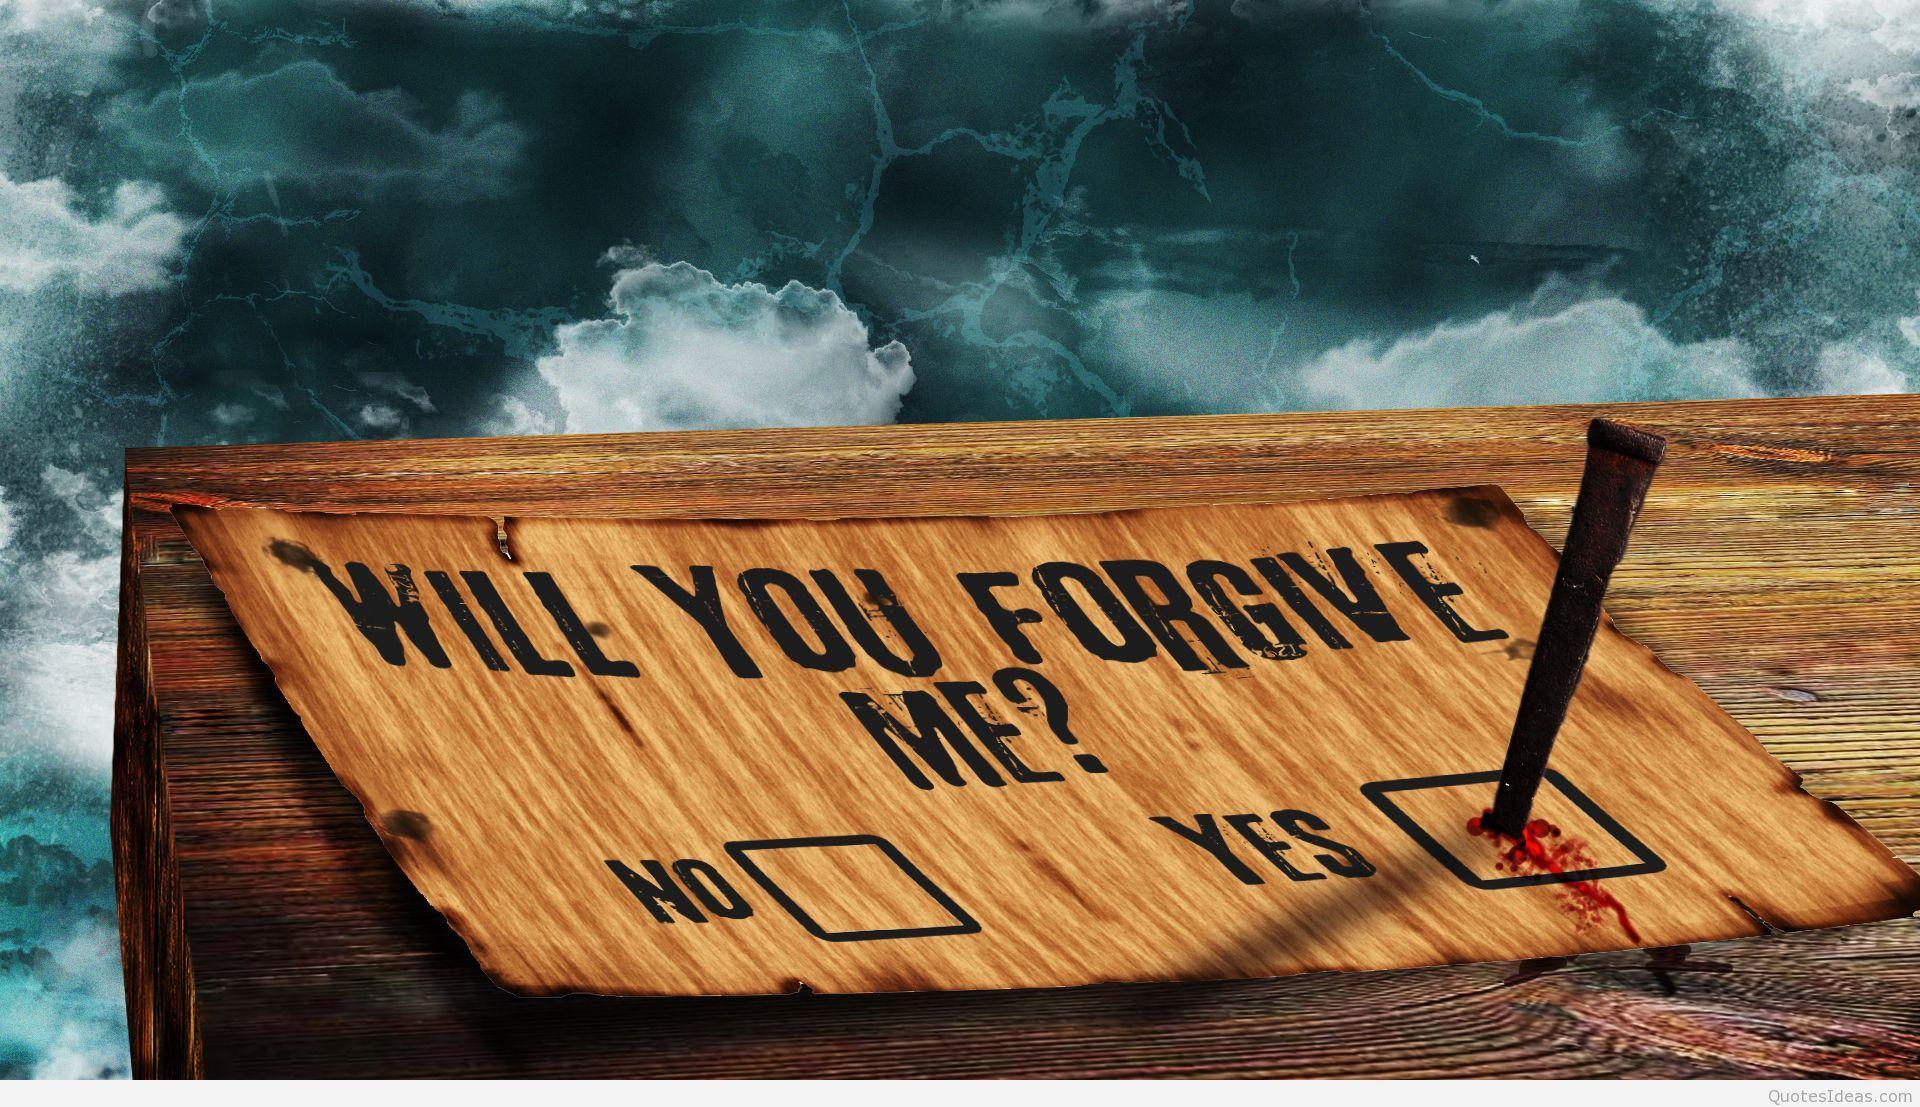 Forgiveness quotes and forgive wallpaper 2015